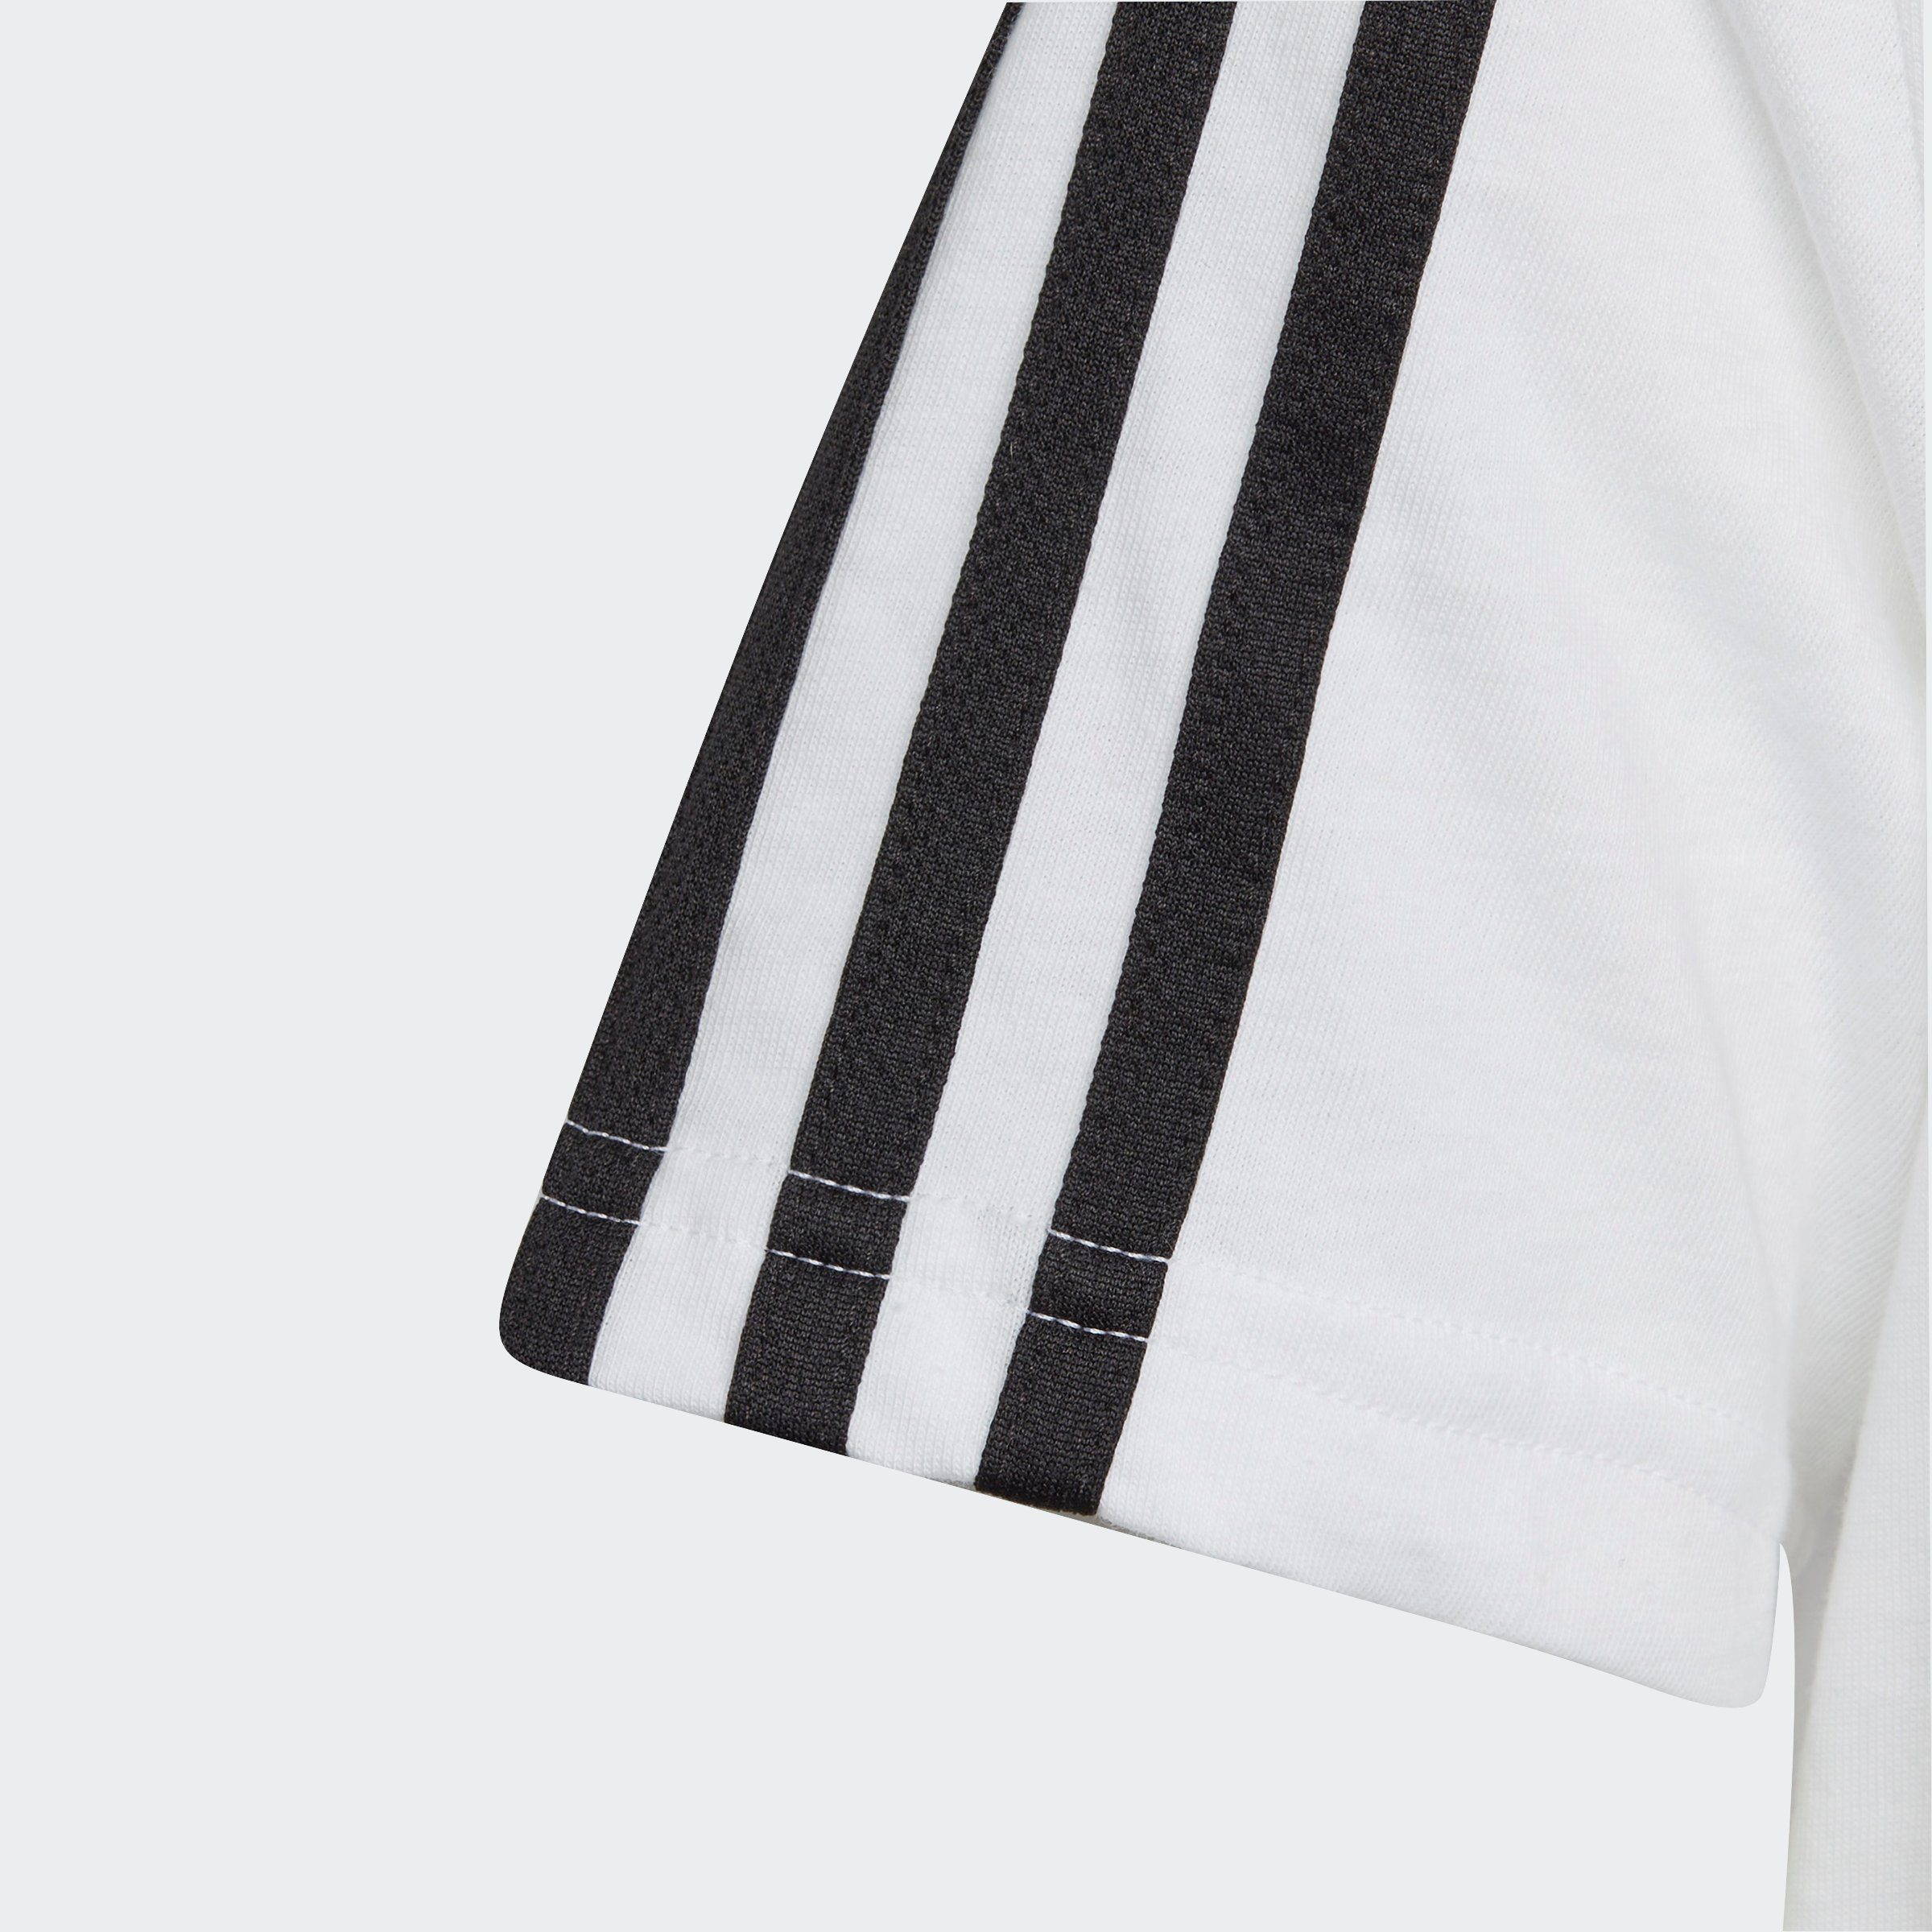 T-Shirt U / TEE Sportswear 3S adidas Black White